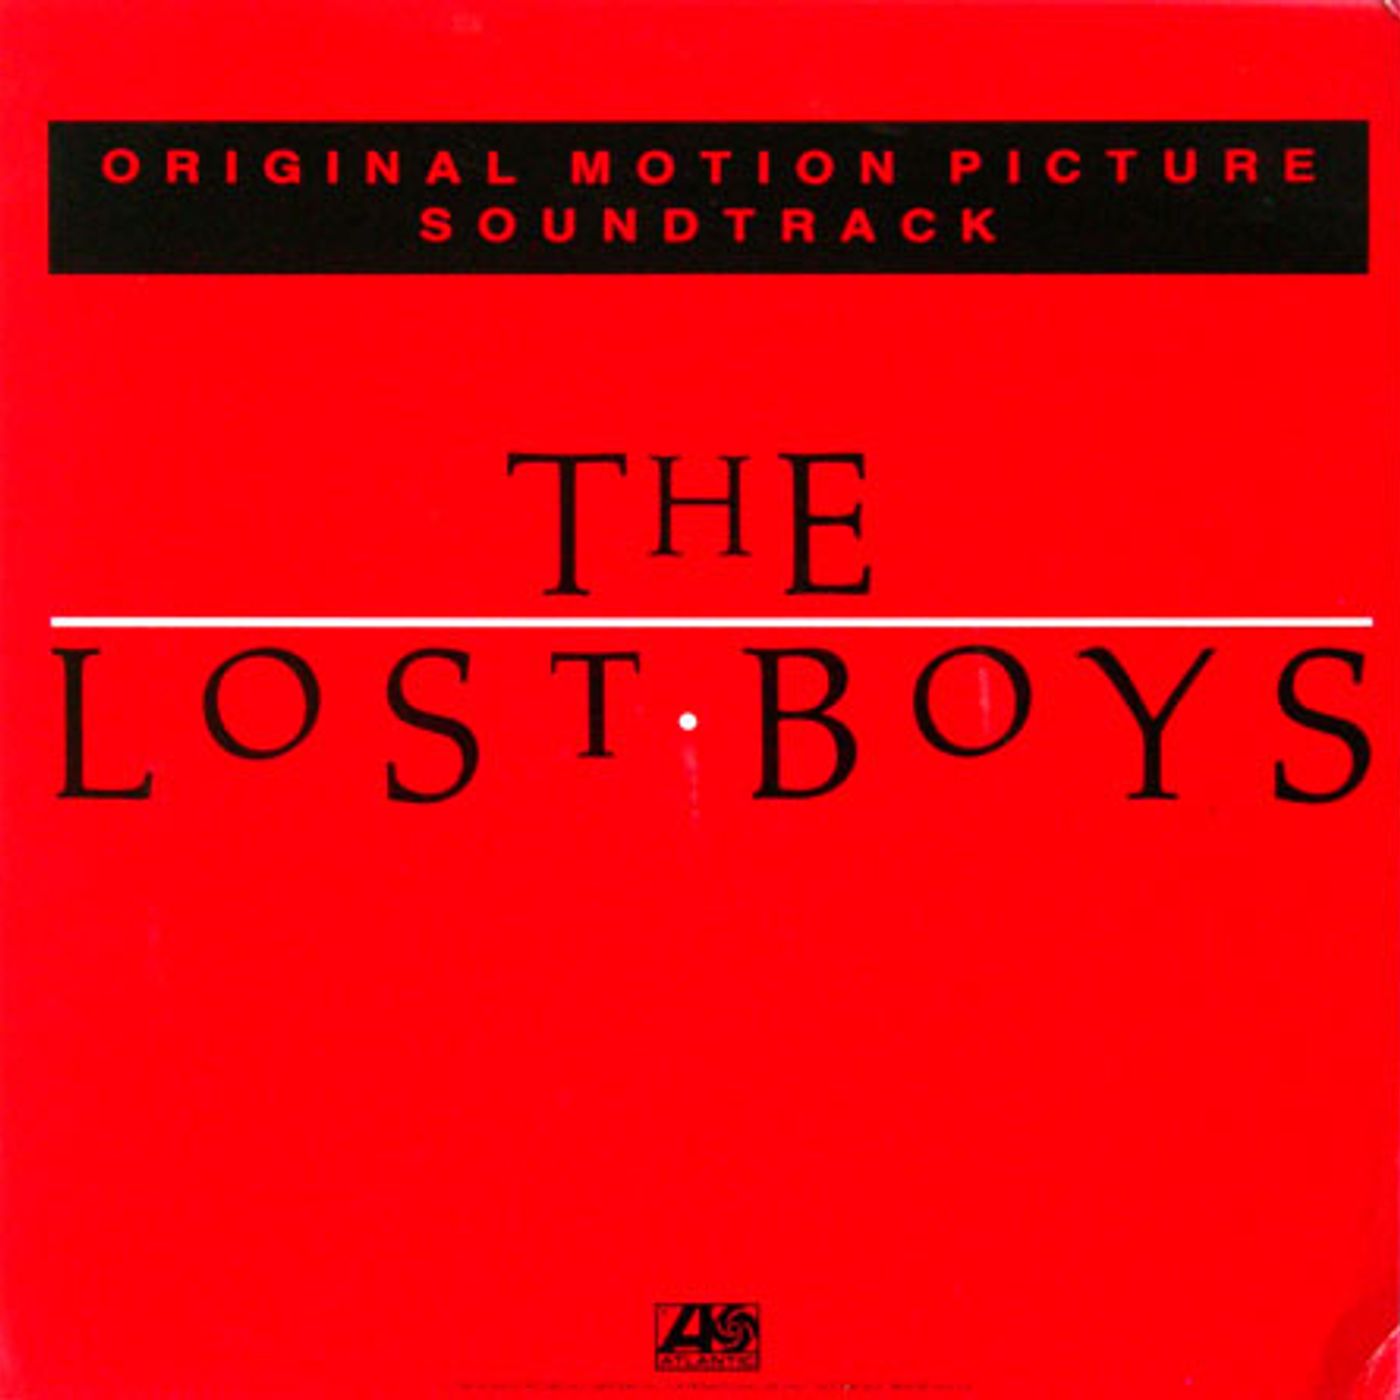 Album Spotlight - The Lost Boys Soundtrack (1987)